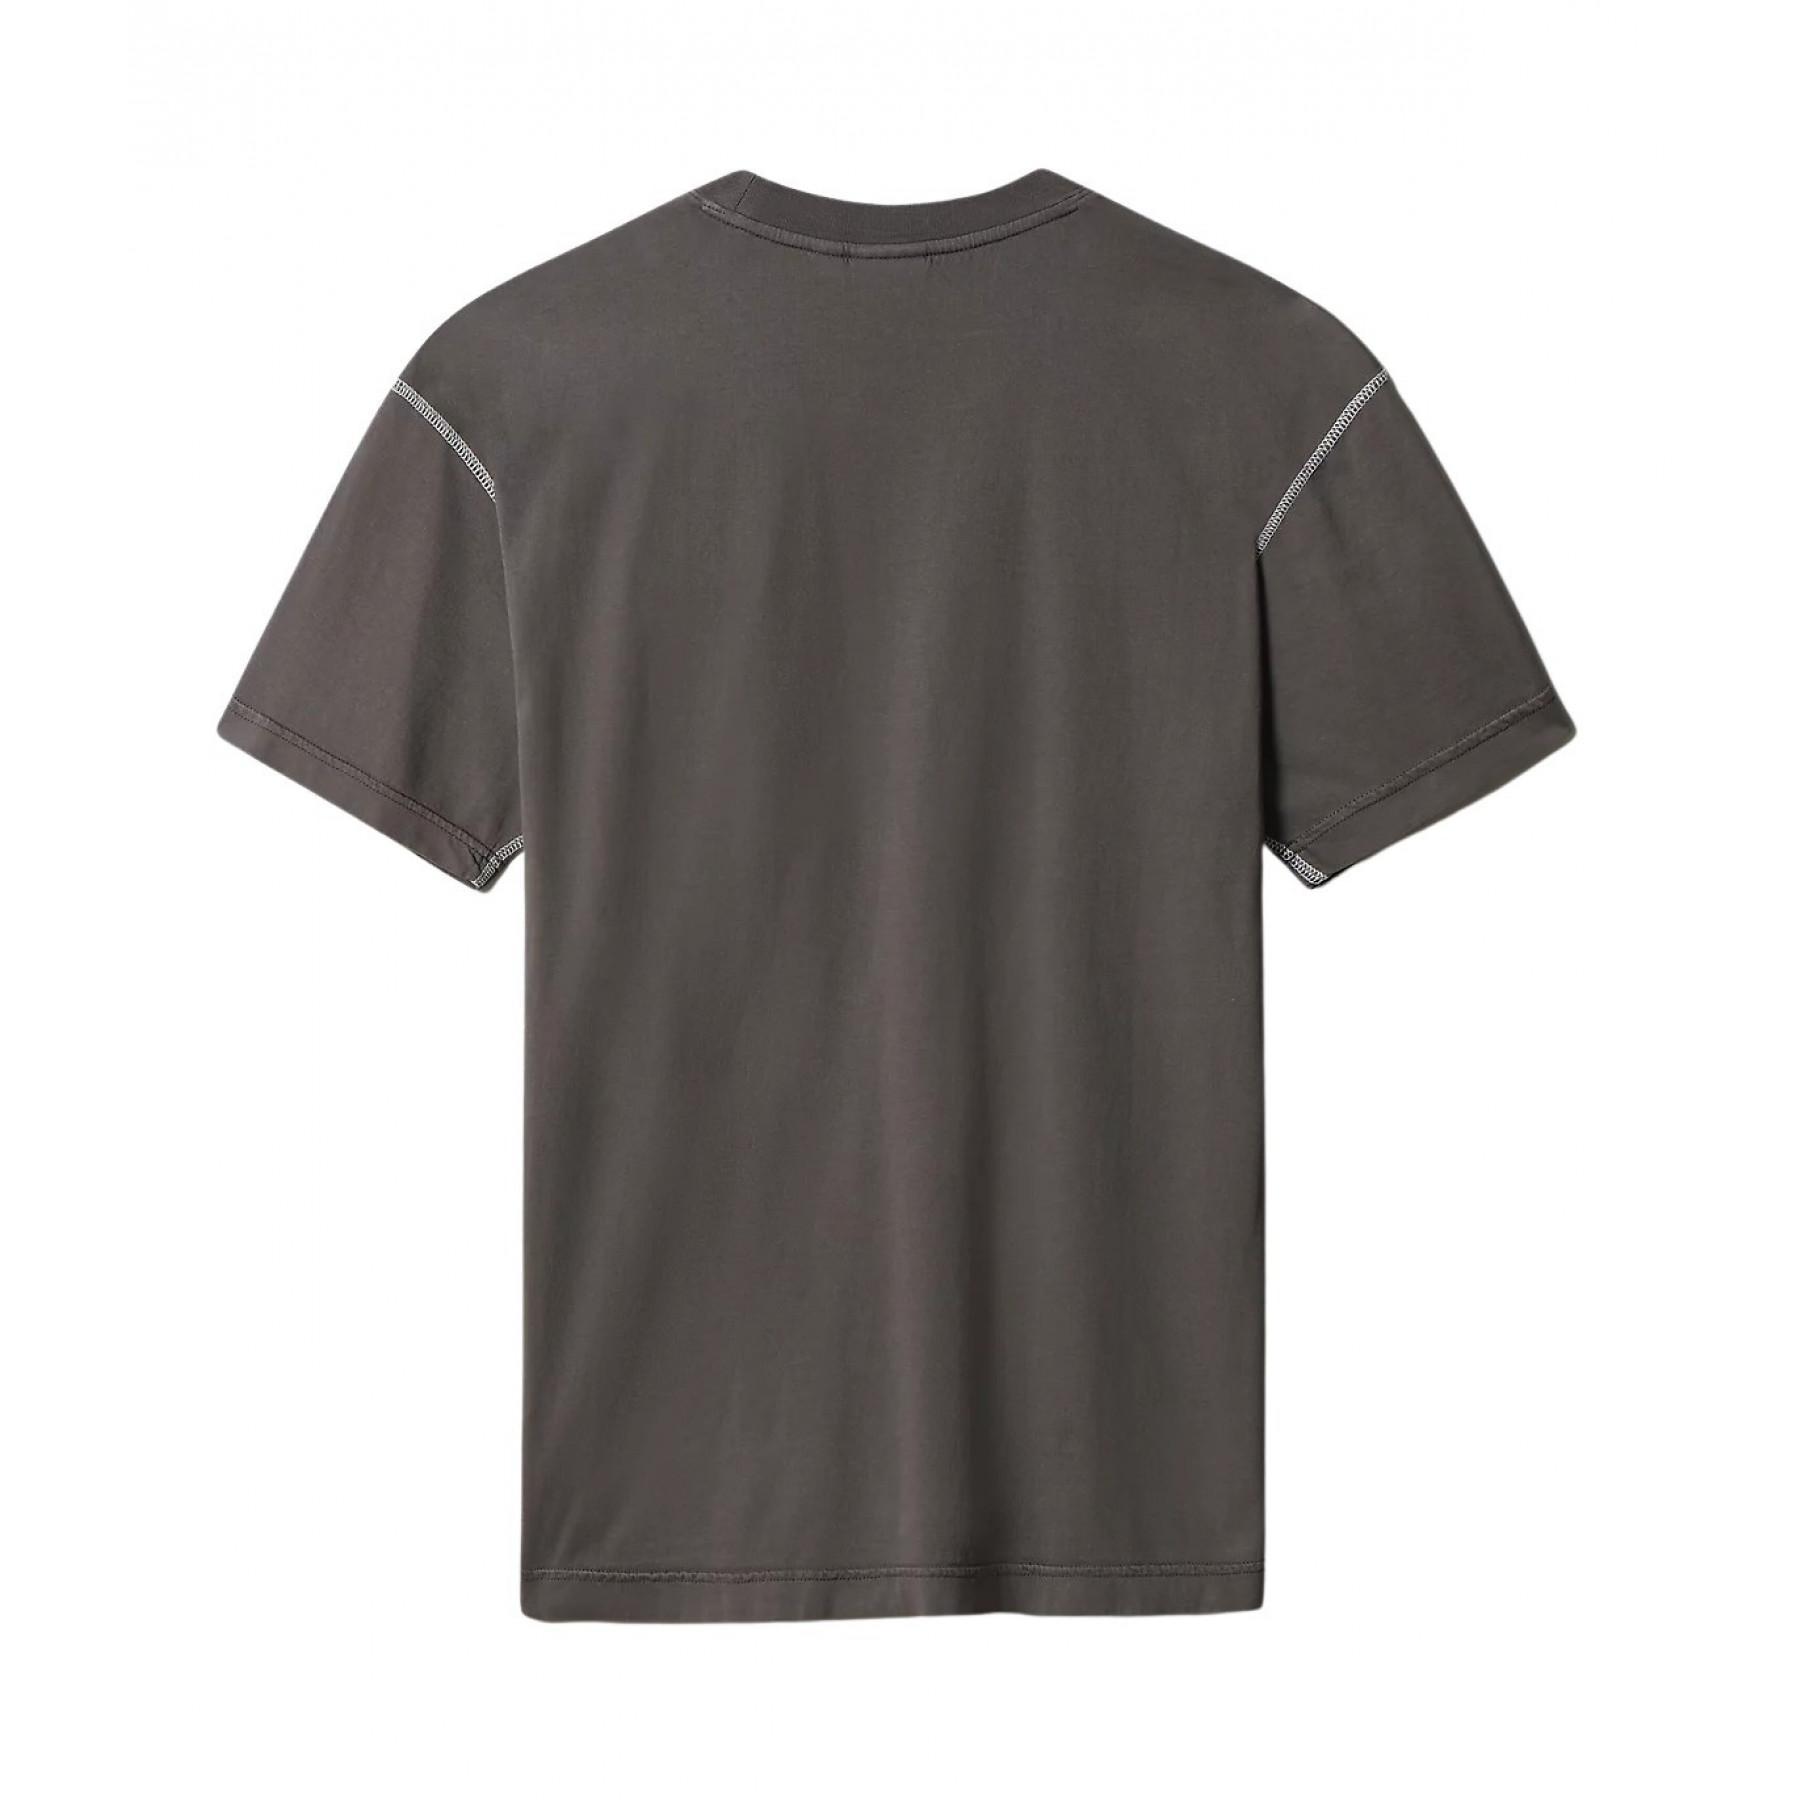 T-shirt Napapijri Kee Grey Gargoyle